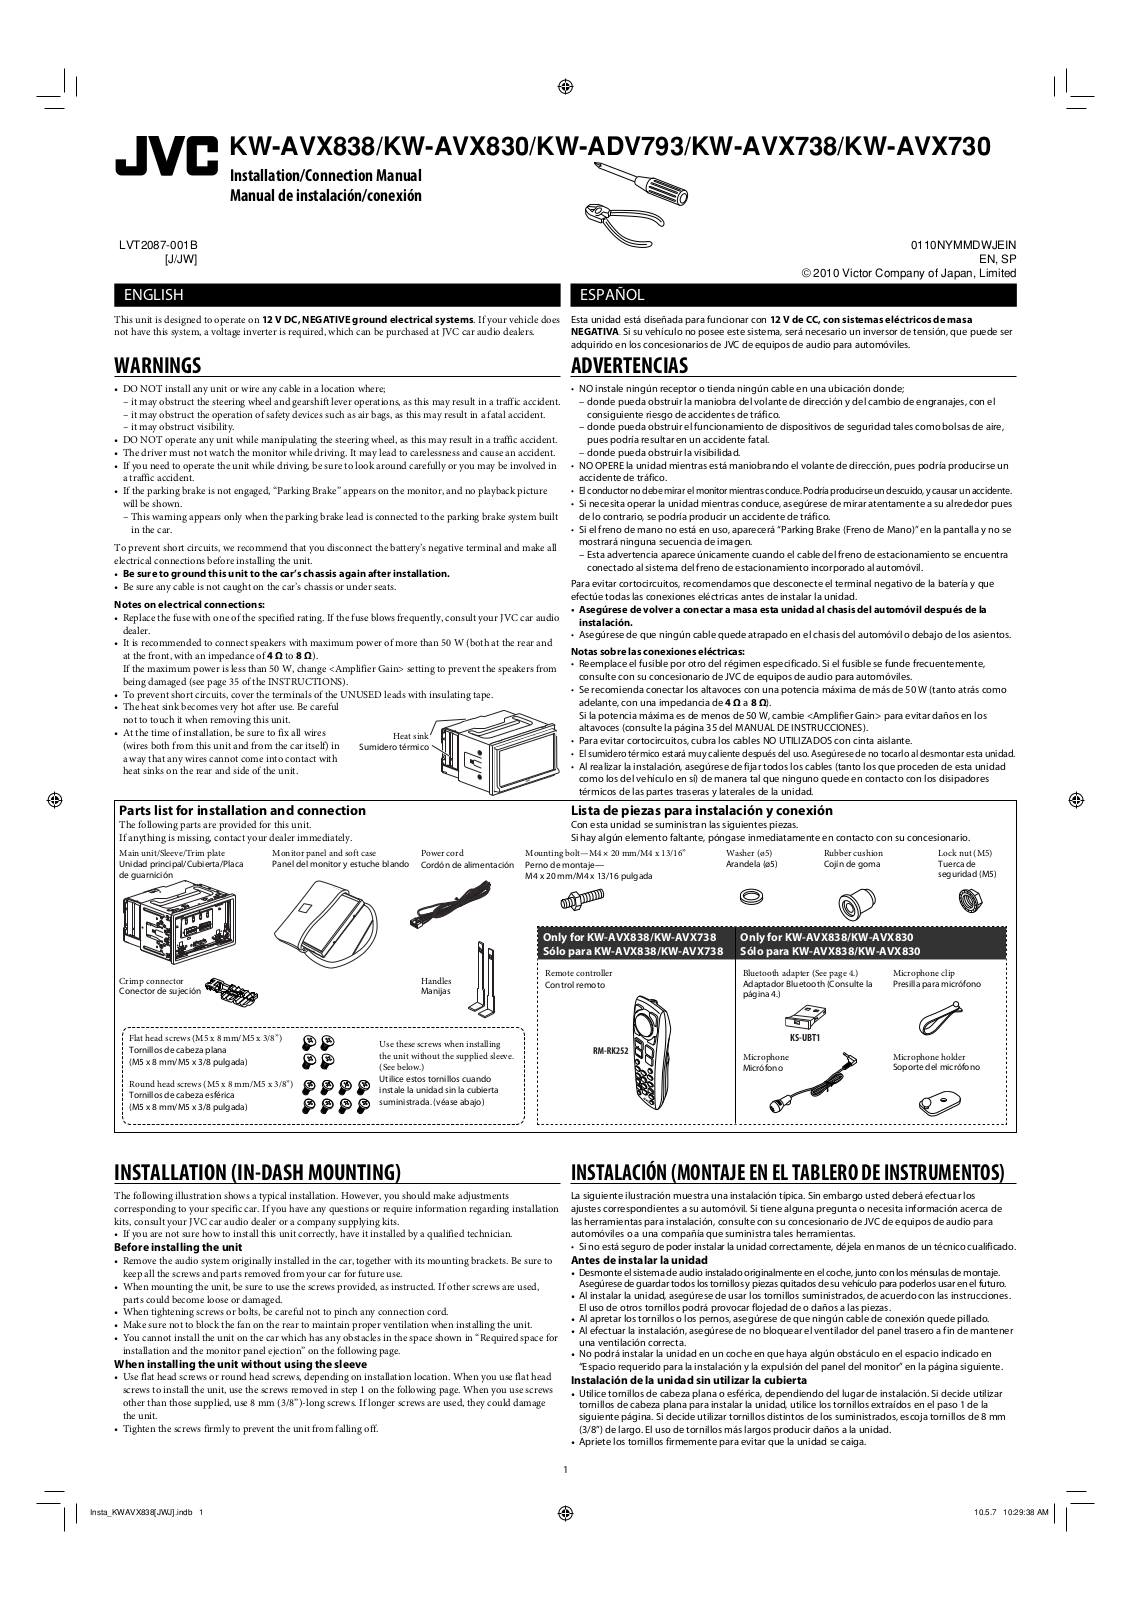 JVC KS-UBT1, LVT2087-001B User Manual